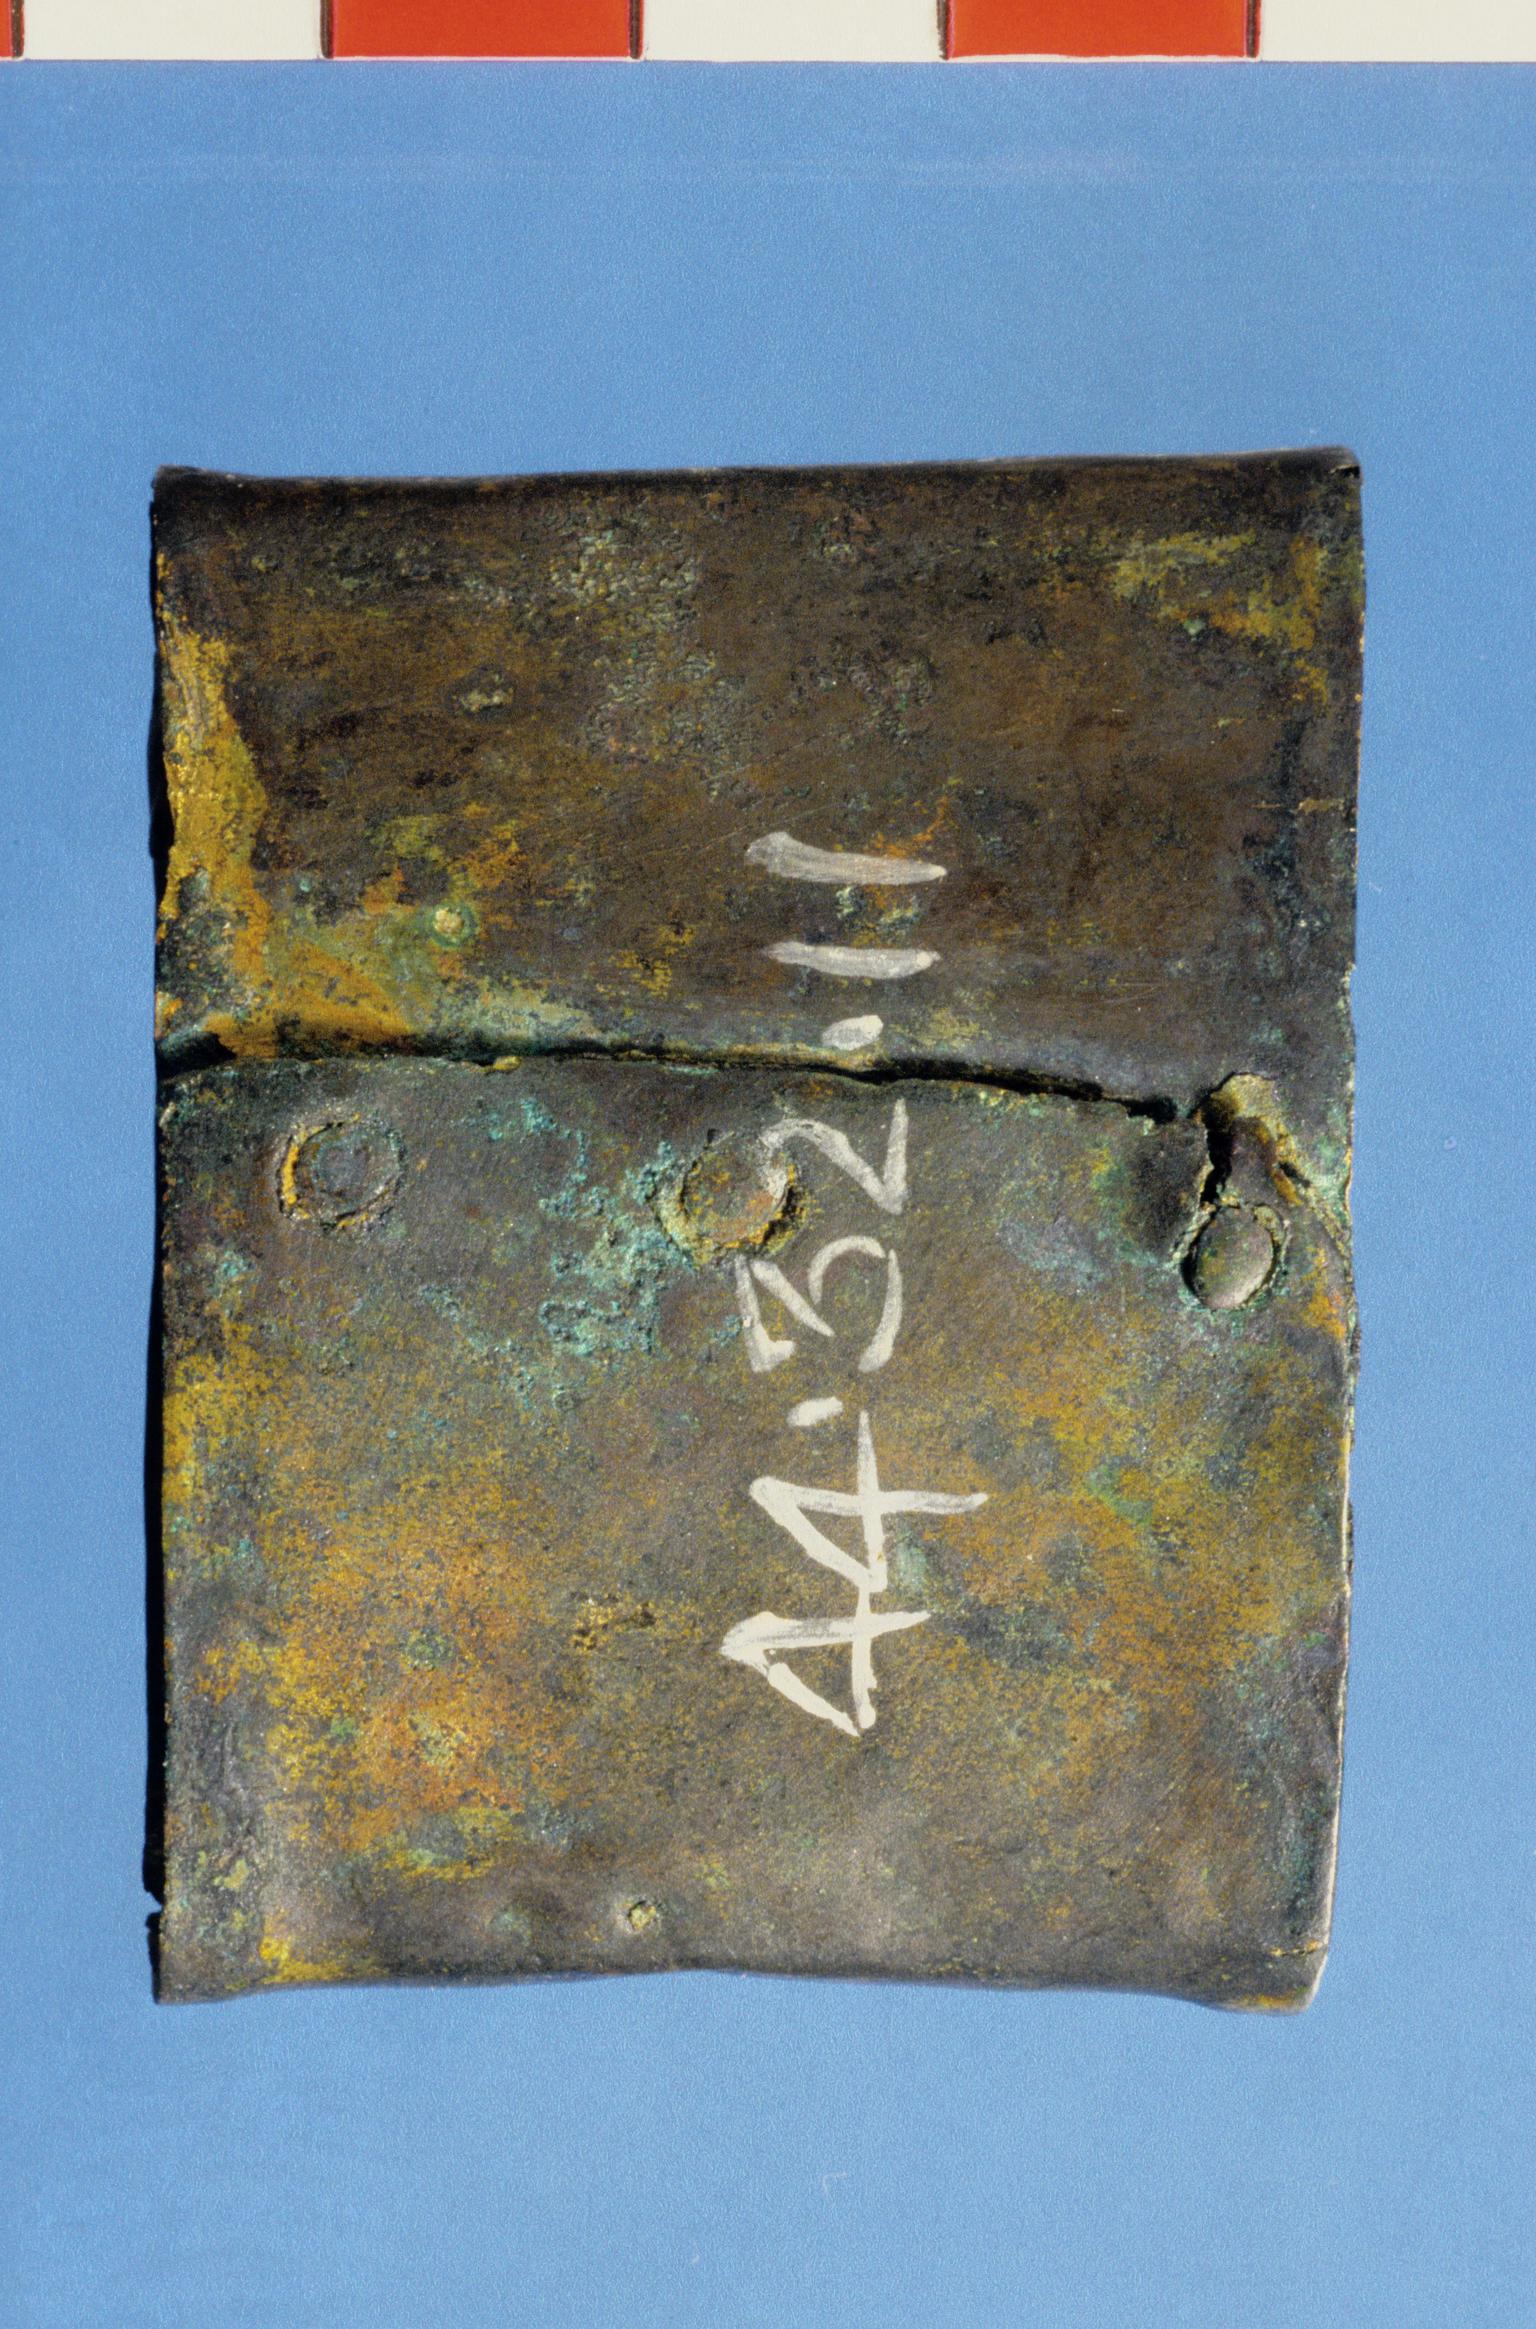 Late Iron Age copper alloy scabbard fitting